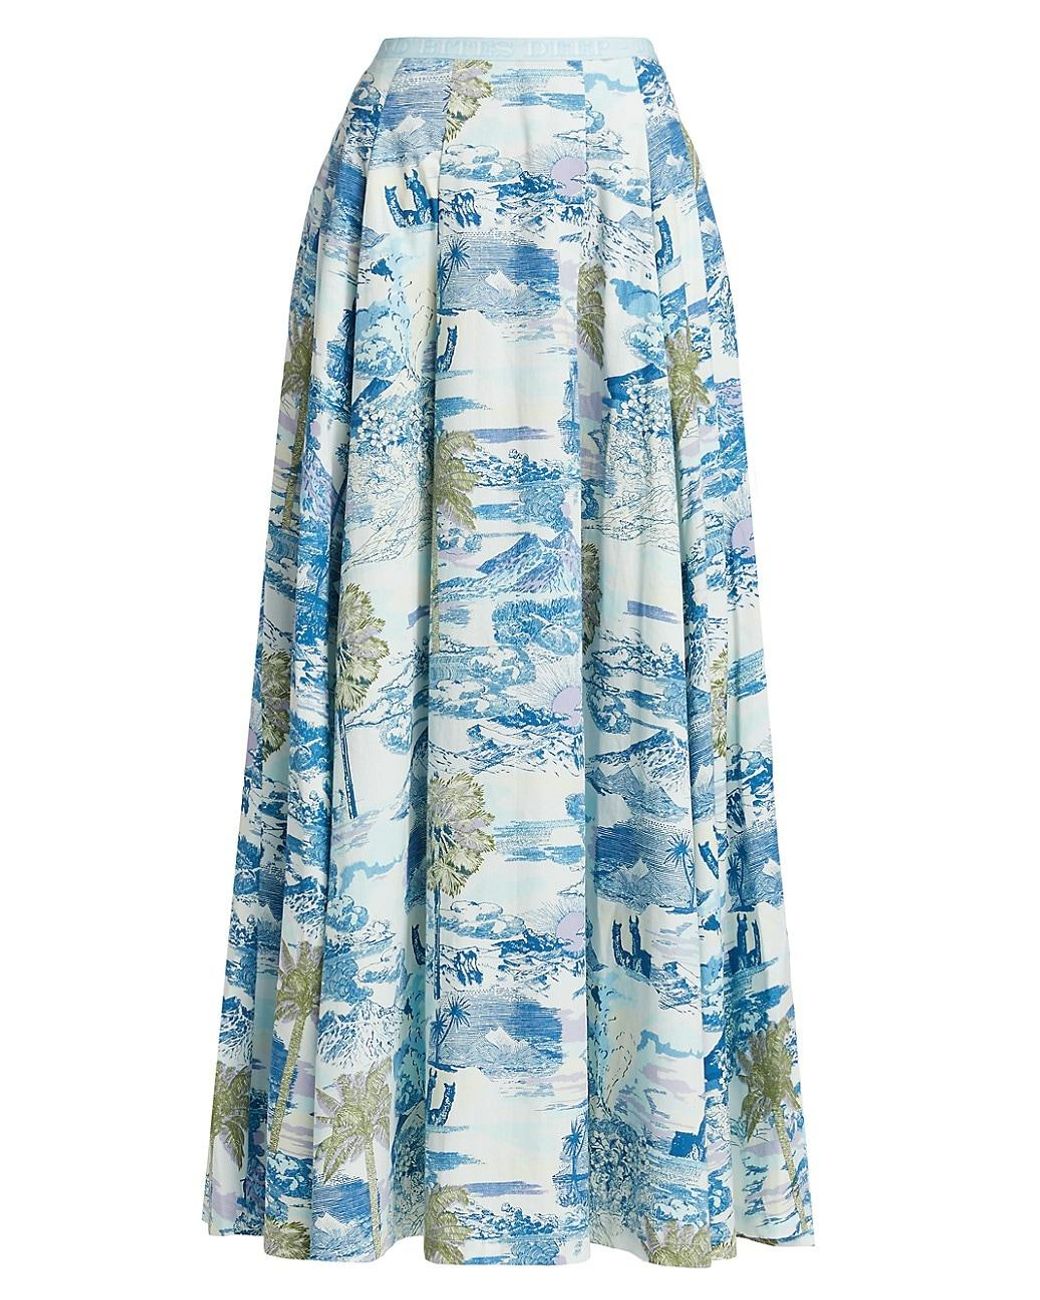 Emporio Sirenuse Flaminia Tropical Print Maxi Skirt in Blue | Lyst